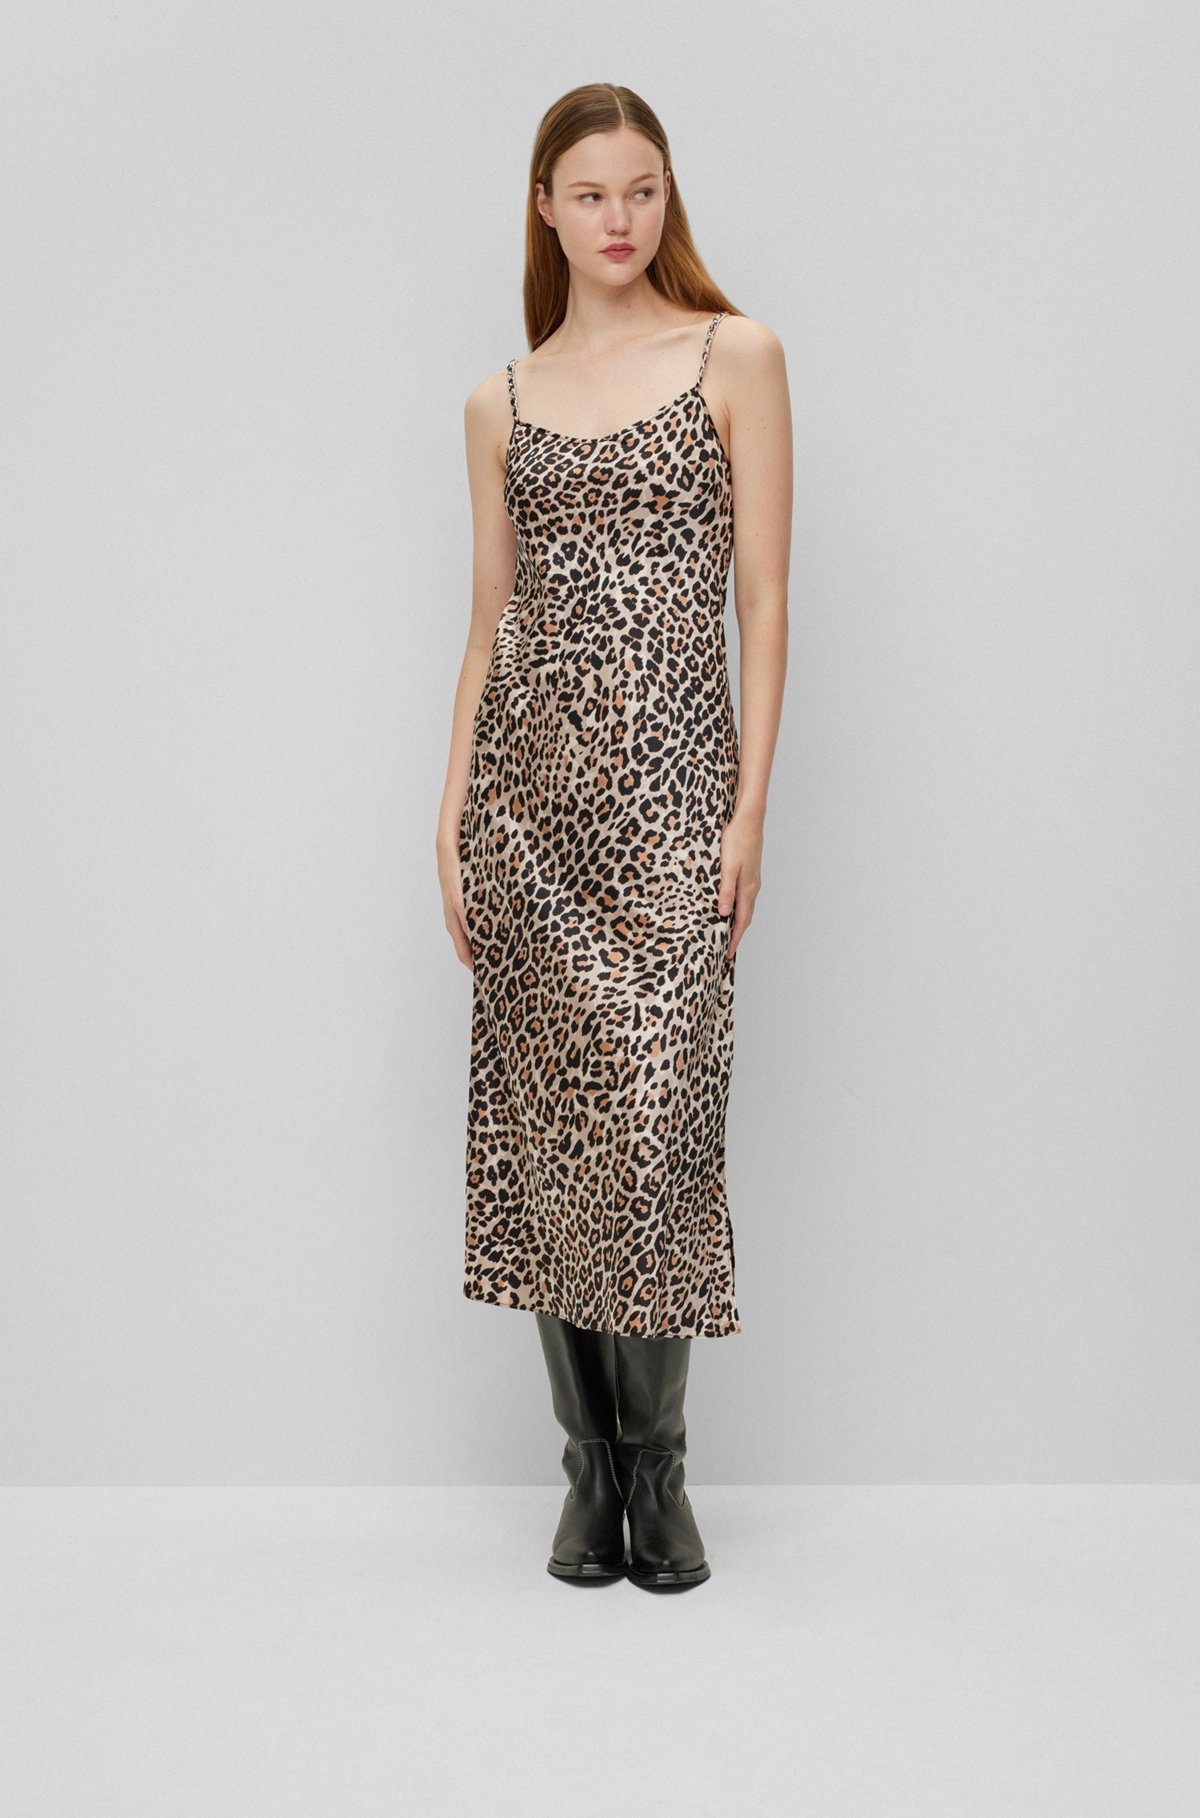 HUGO - Leopard-print slip dress with chain-detail straps